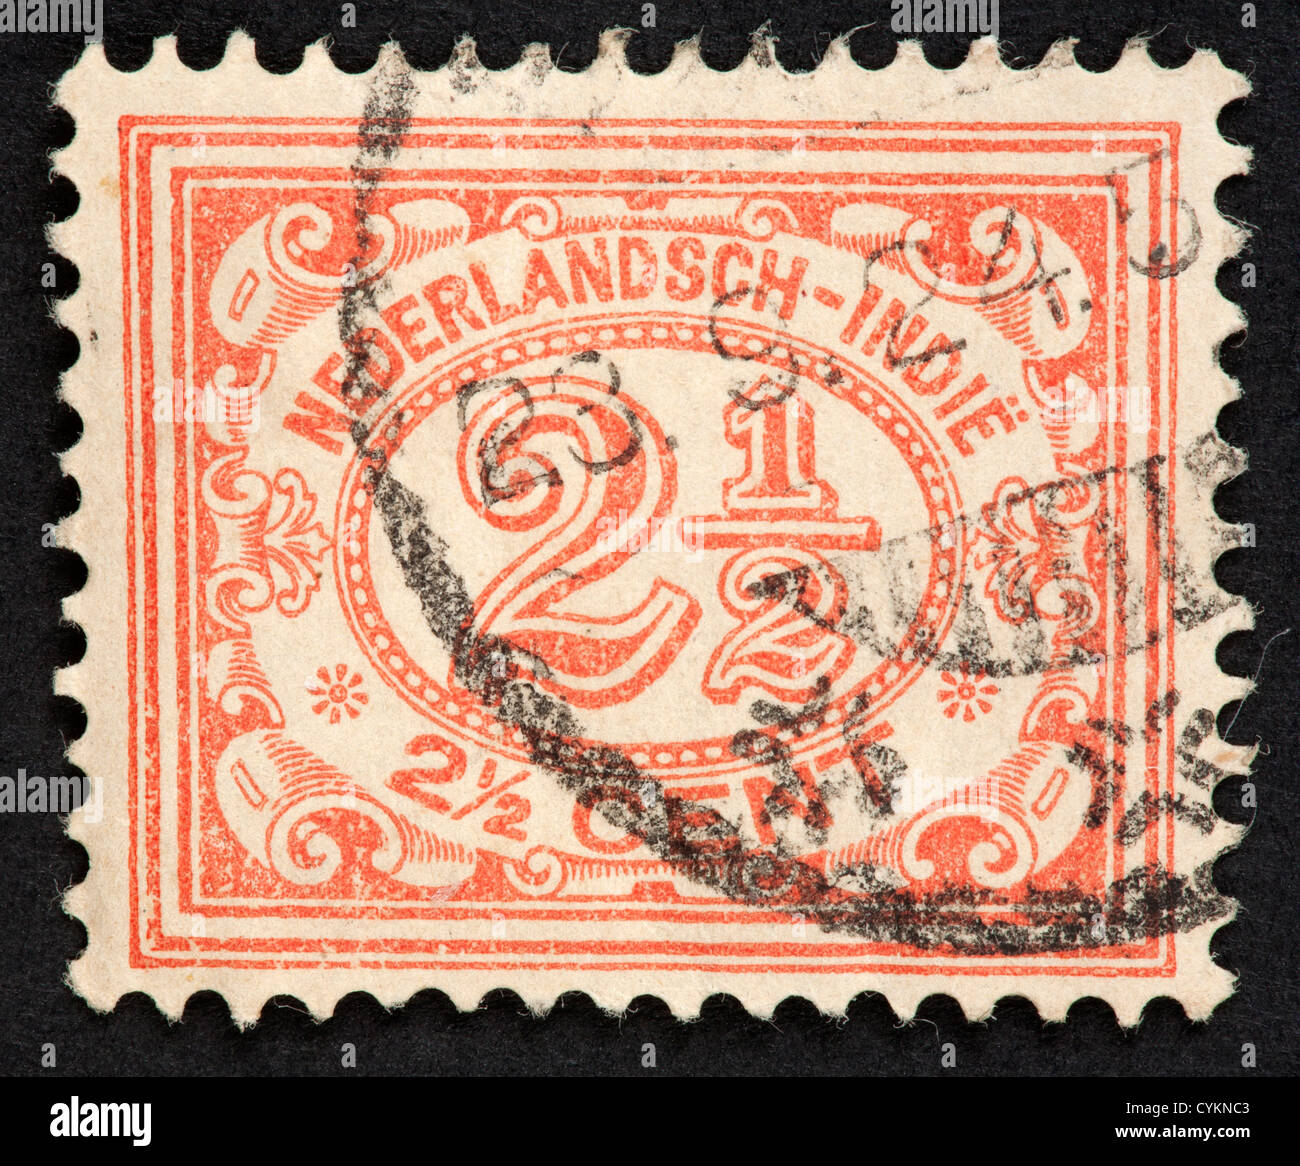 Le Indie orientali olandesi francobollo Foto Stock